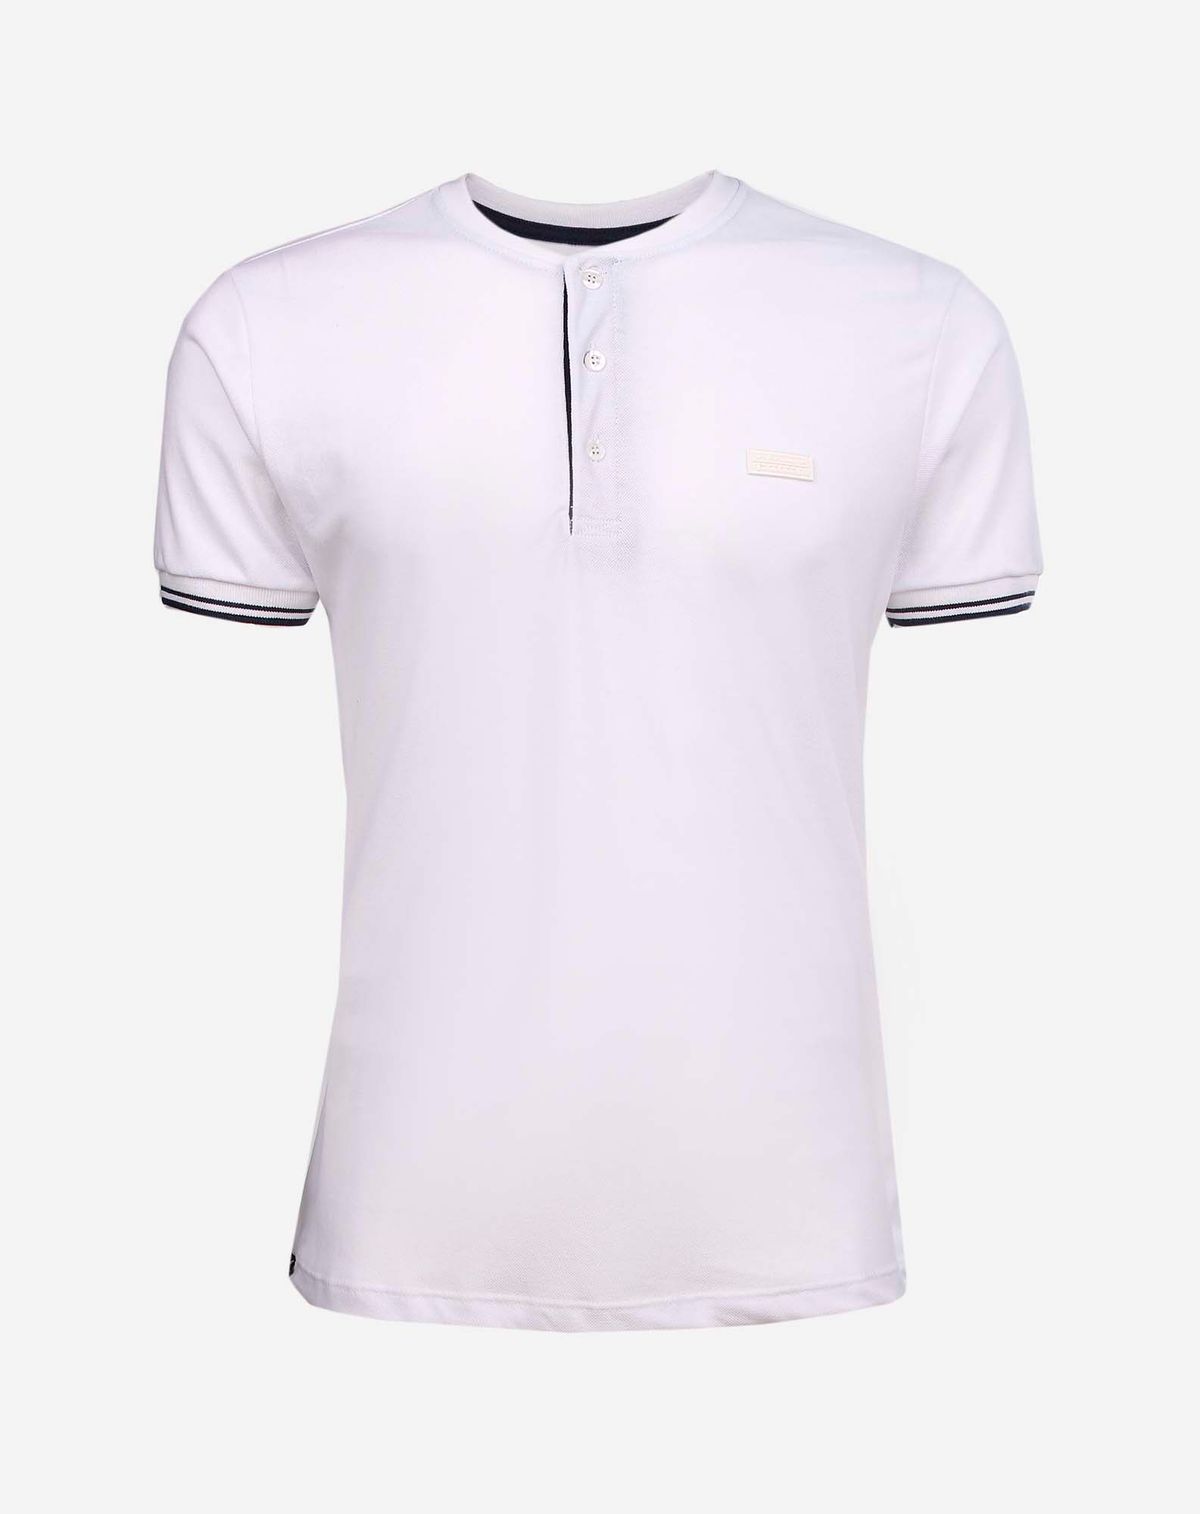 675452013-camisa-polo-masculina-gola-padre-botoes-branco-p-88c